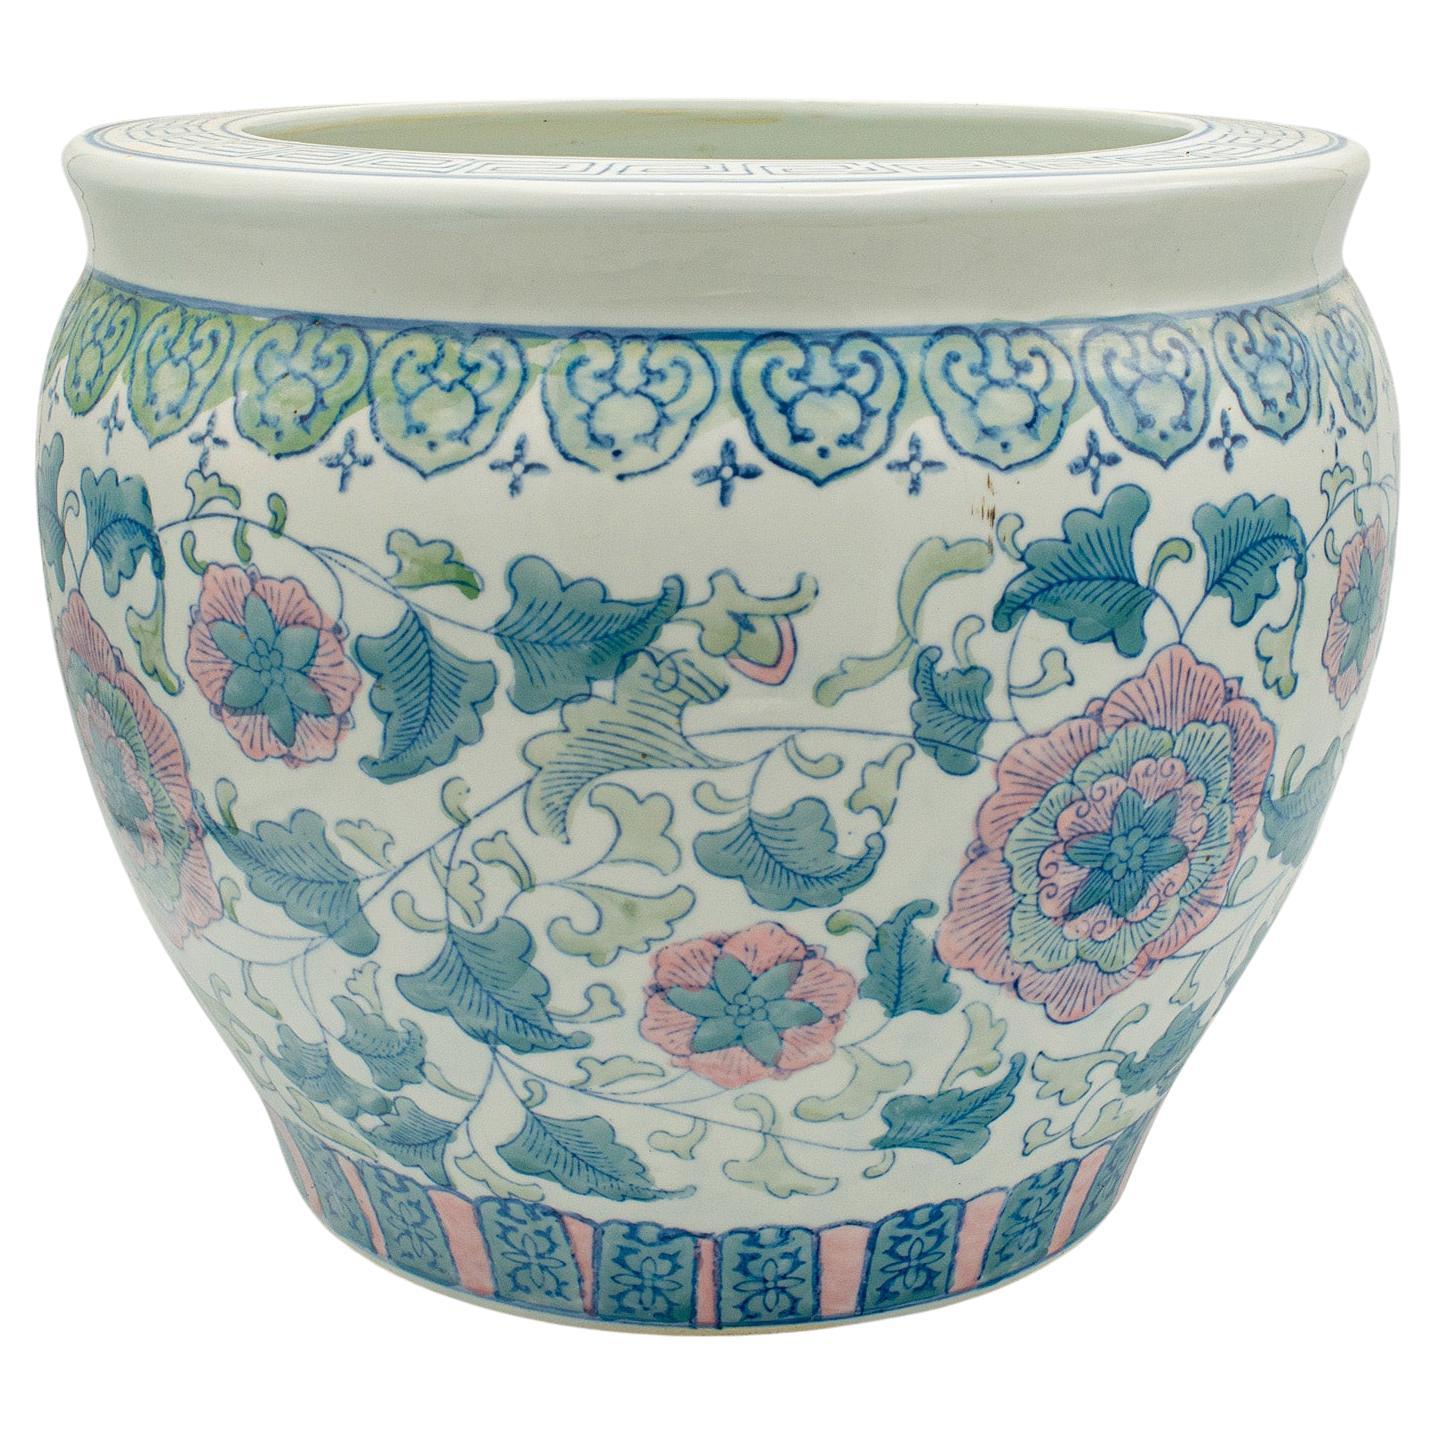 Vintage Decorative Fishbowl, Chinese, Ceramic, Planter, Jardiniere, Art Deco